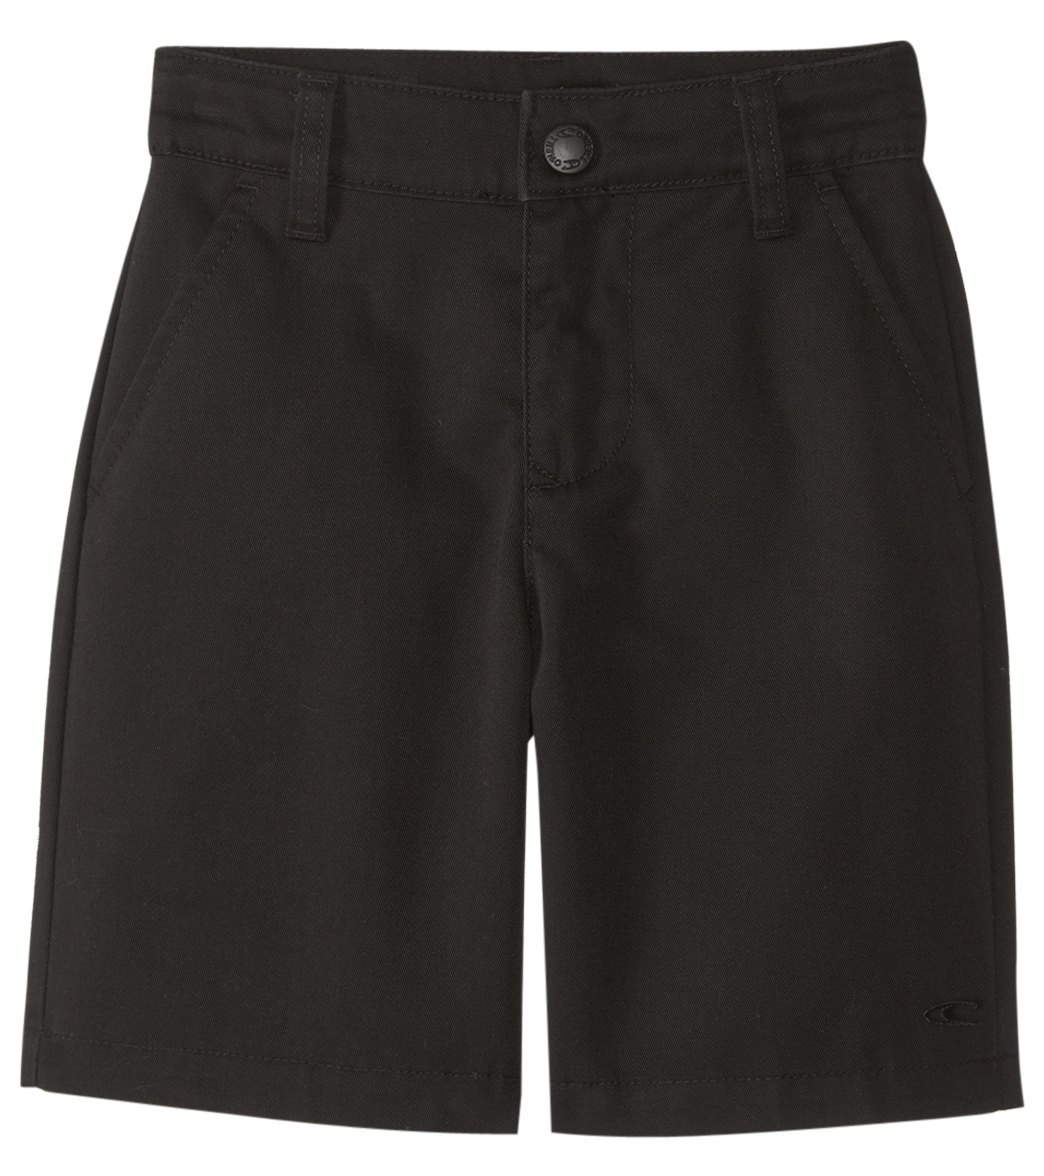 O'neill Boys' Contact Short 4-7X - Black Large 7 Cotton/Polyester - Swimoutlet.com